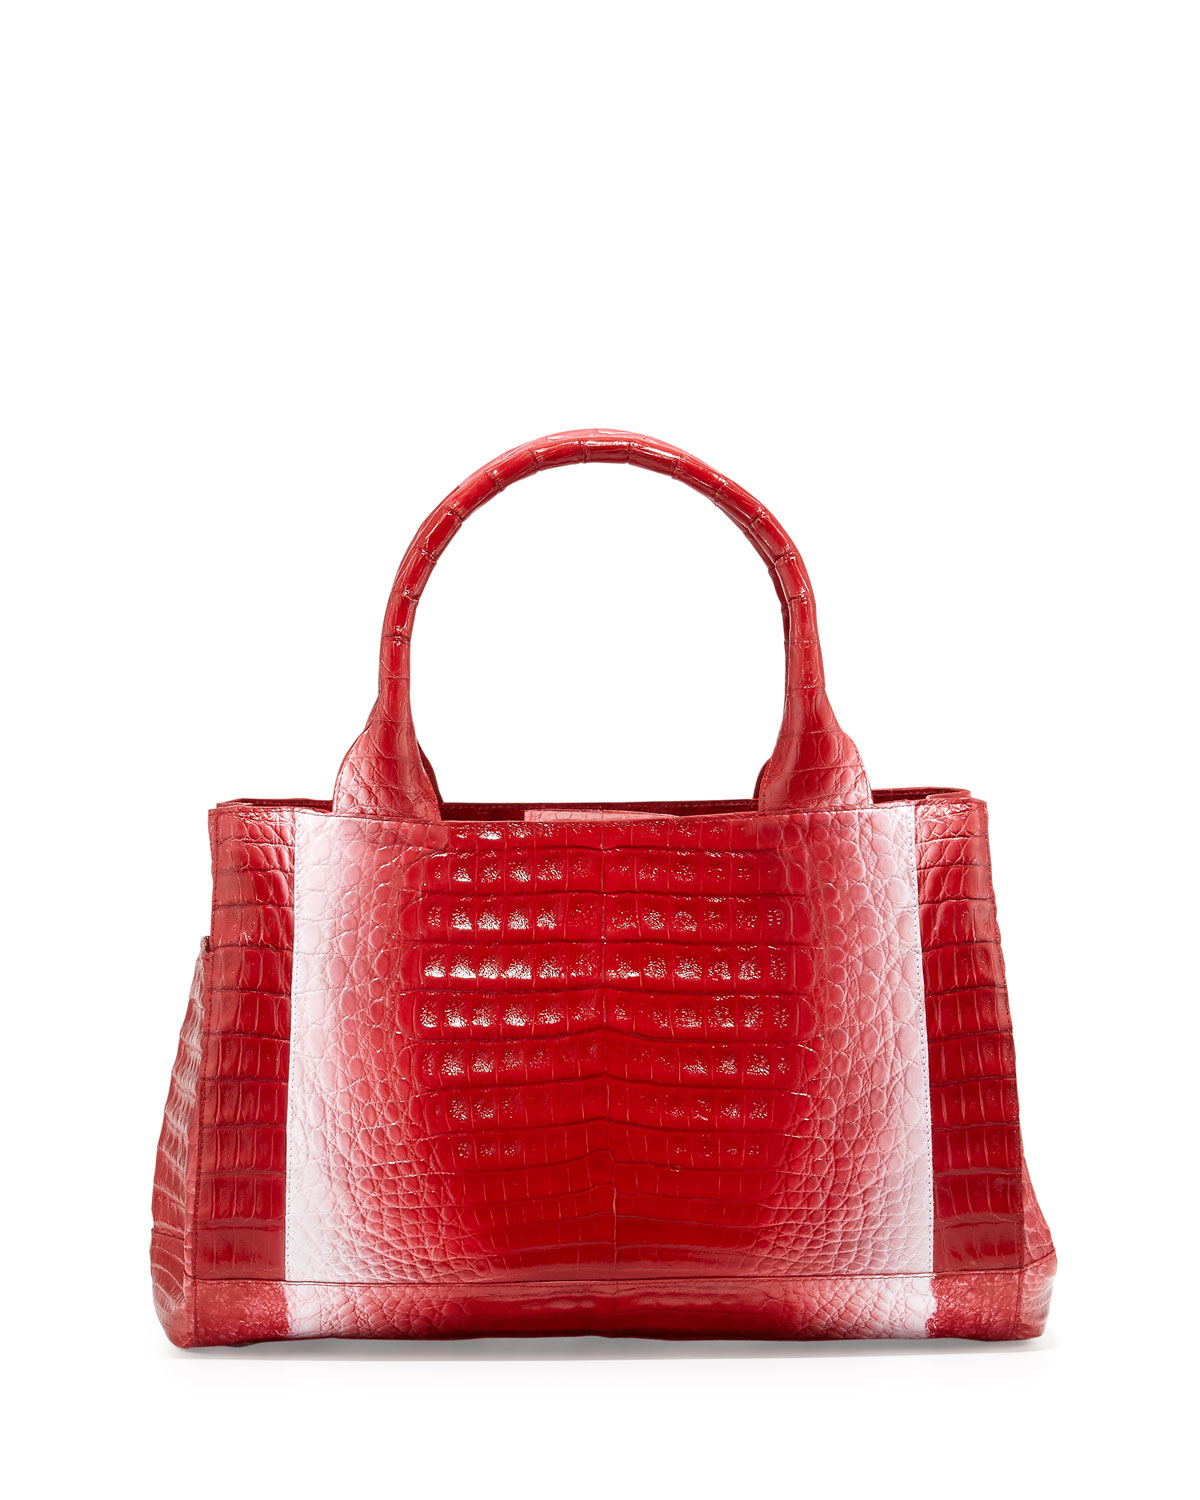 Lyst - Nancy Gonzalez Crocodile Rectangle Tote Bag in Red